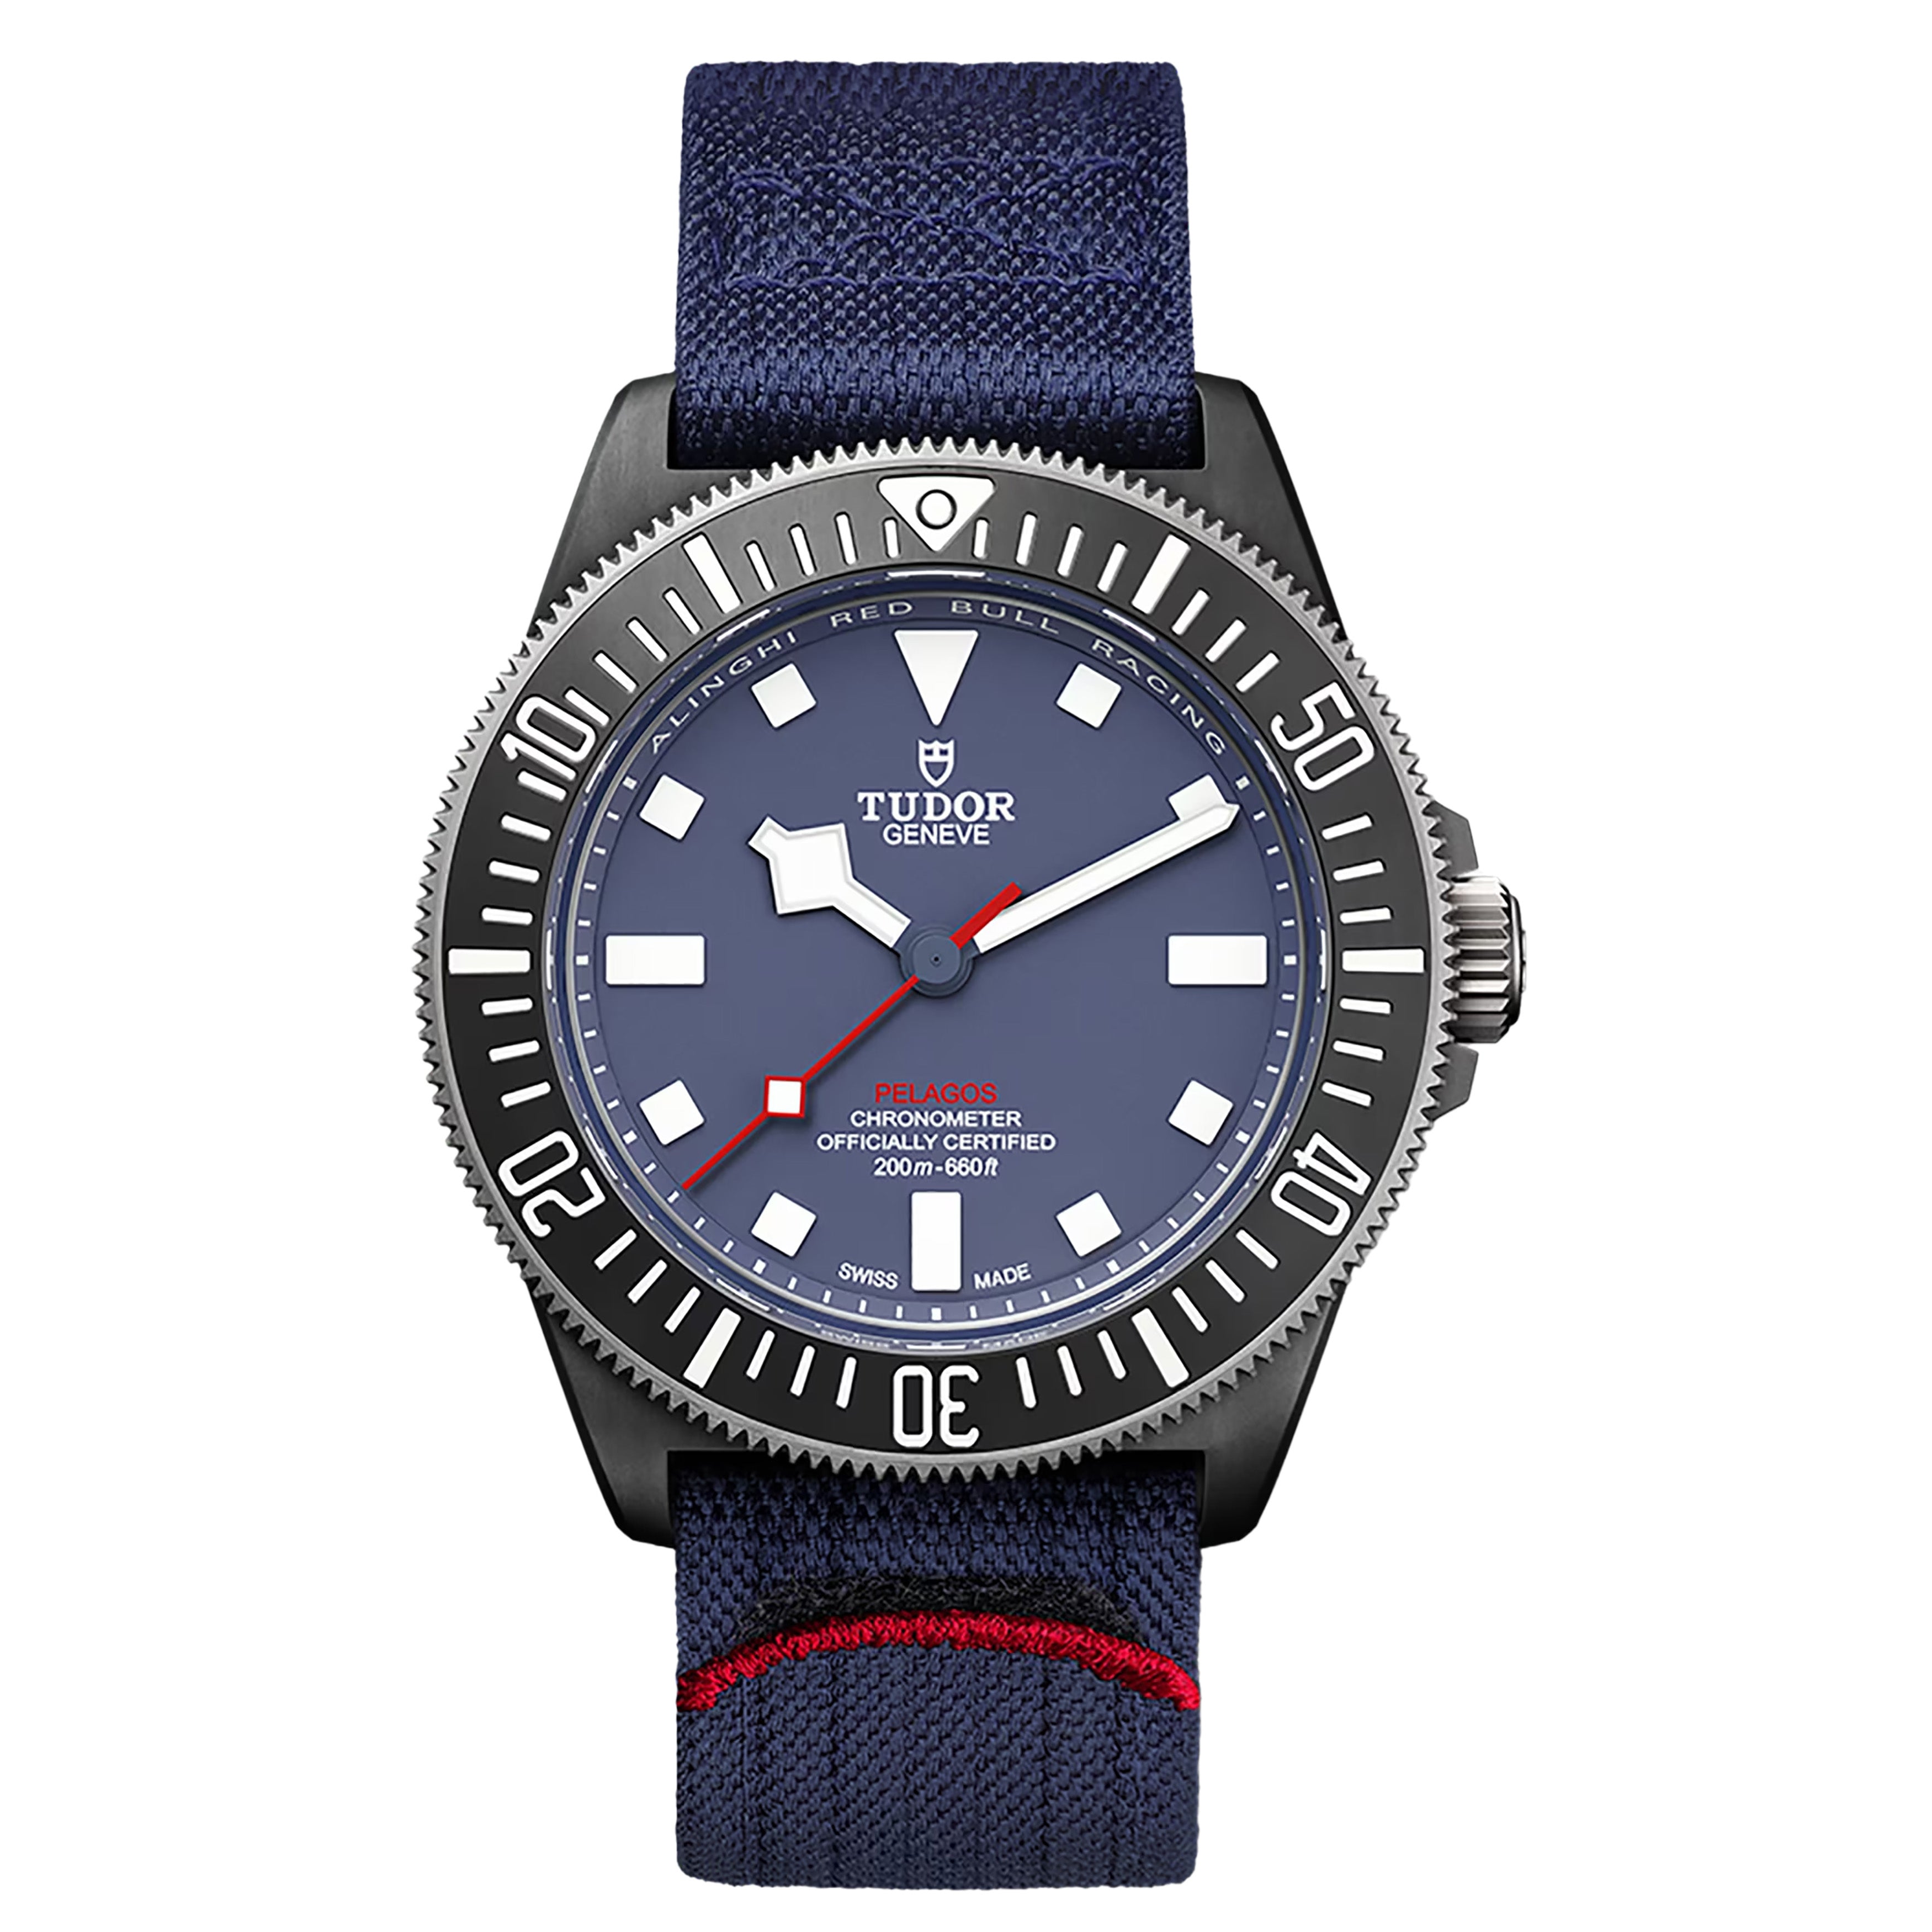 Tudor Pelagos FXD Alinghi Red Bull Racing Watch, 42mm Blue Dial, M25707KN-0001